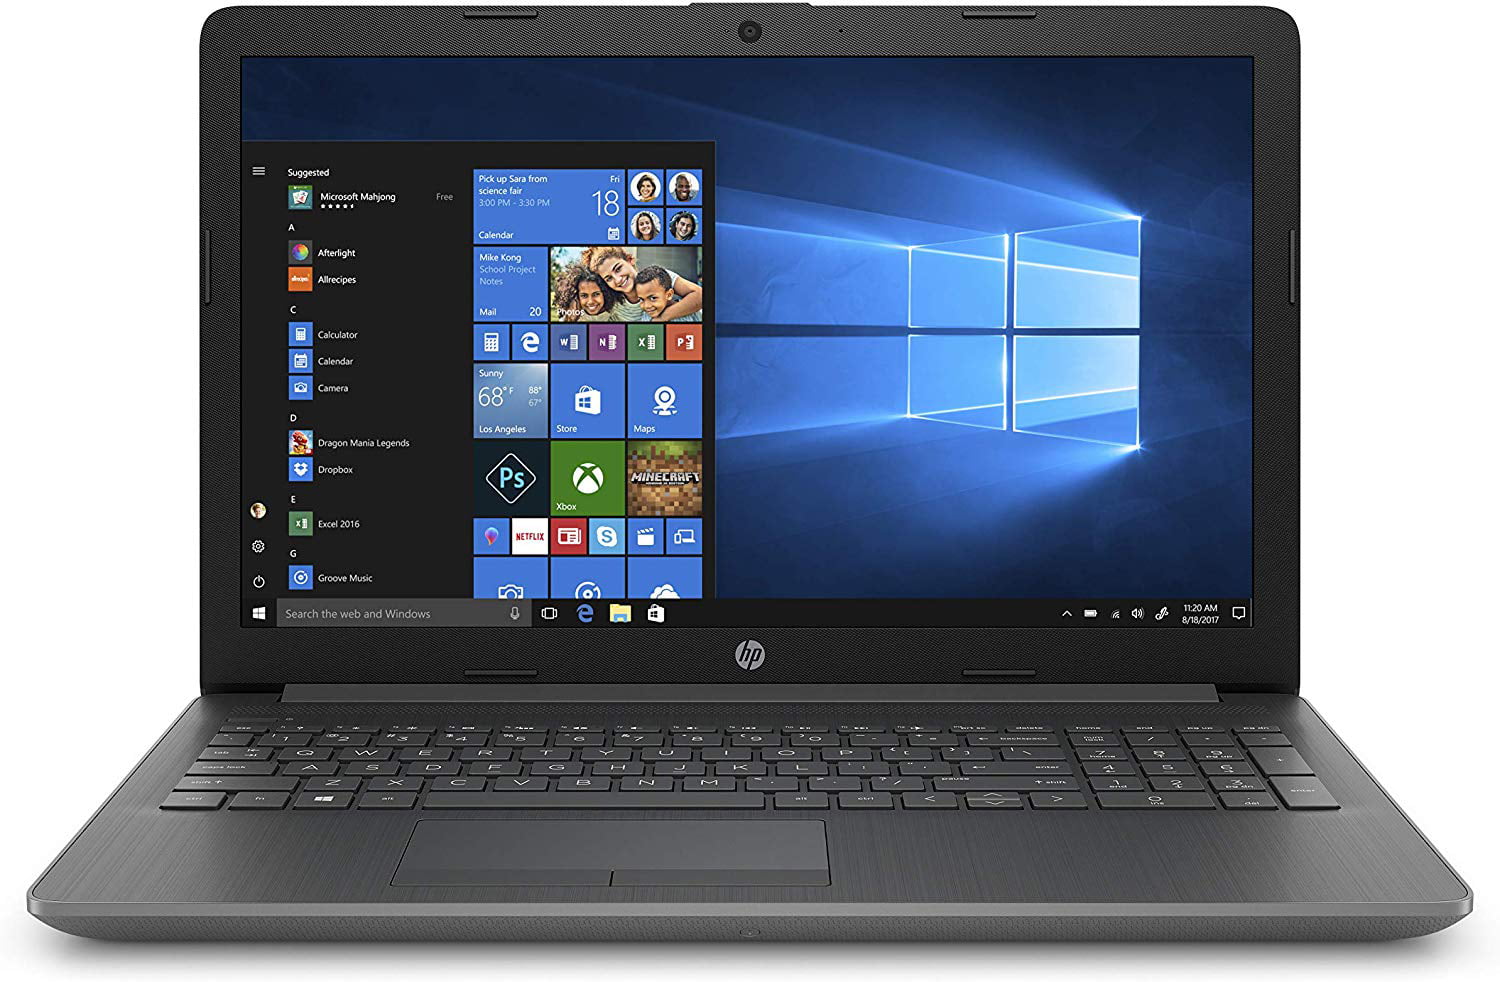 HP 15-Inch Laptop, AMD Ryzen 5 3500U Processor, 8 GB RAM